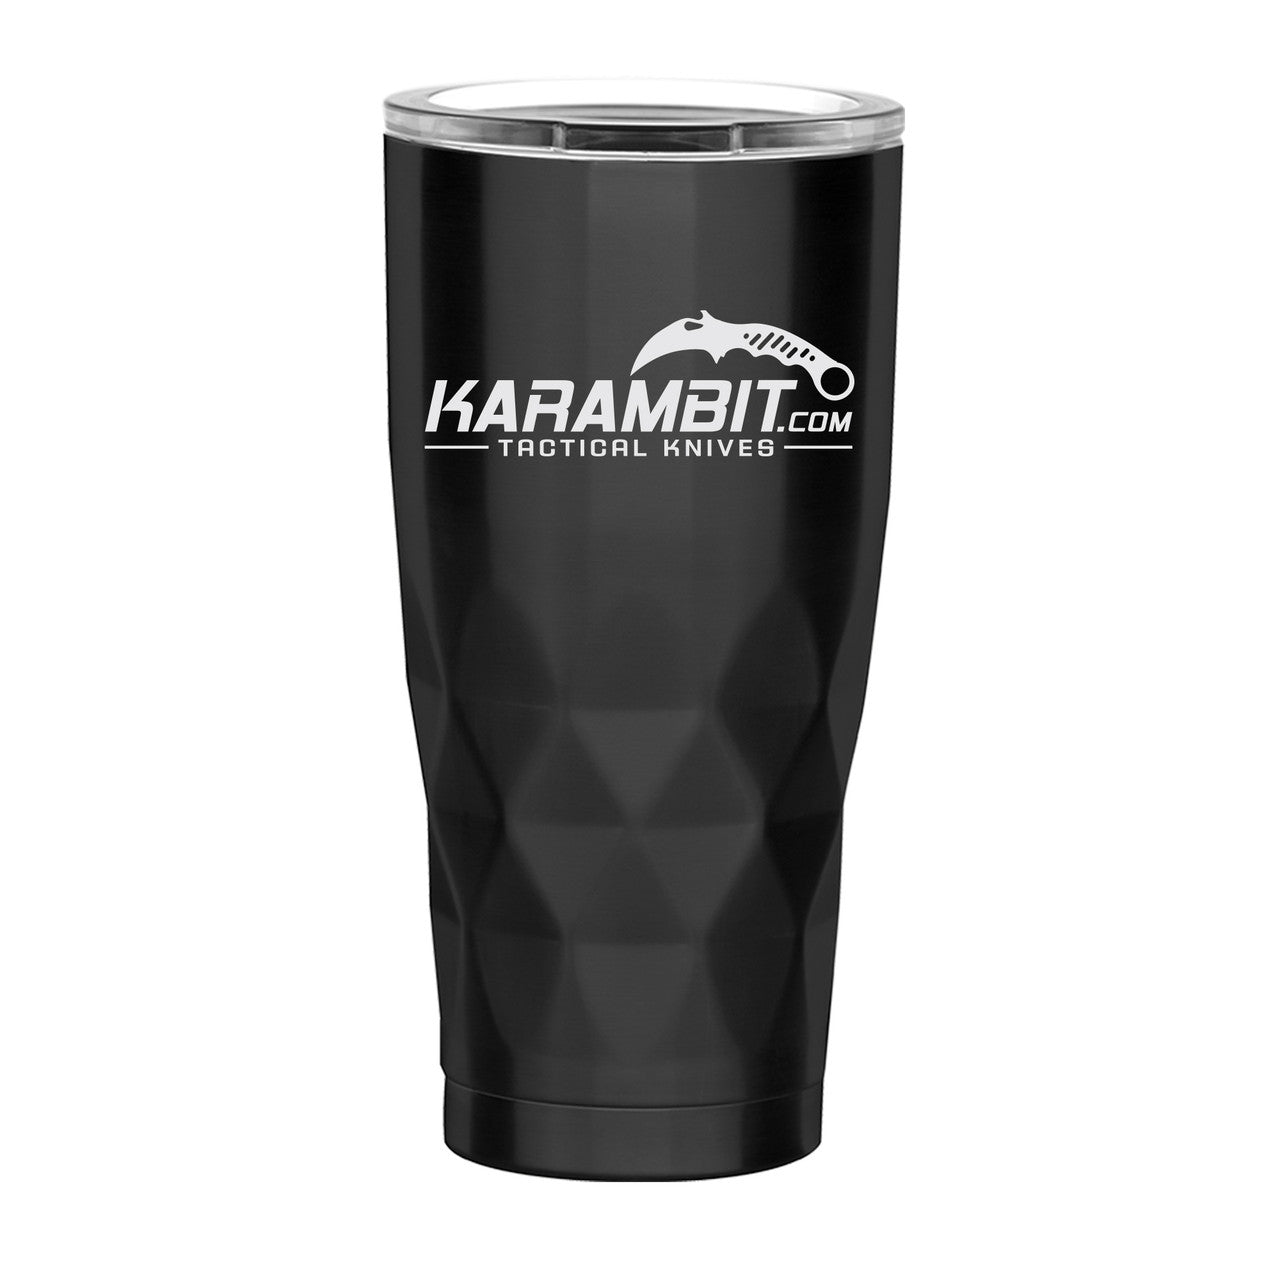 Karambit.com 20 oz. Stainless Steel Tumbler - Black (KbitLogo-Tumbler-BLK)